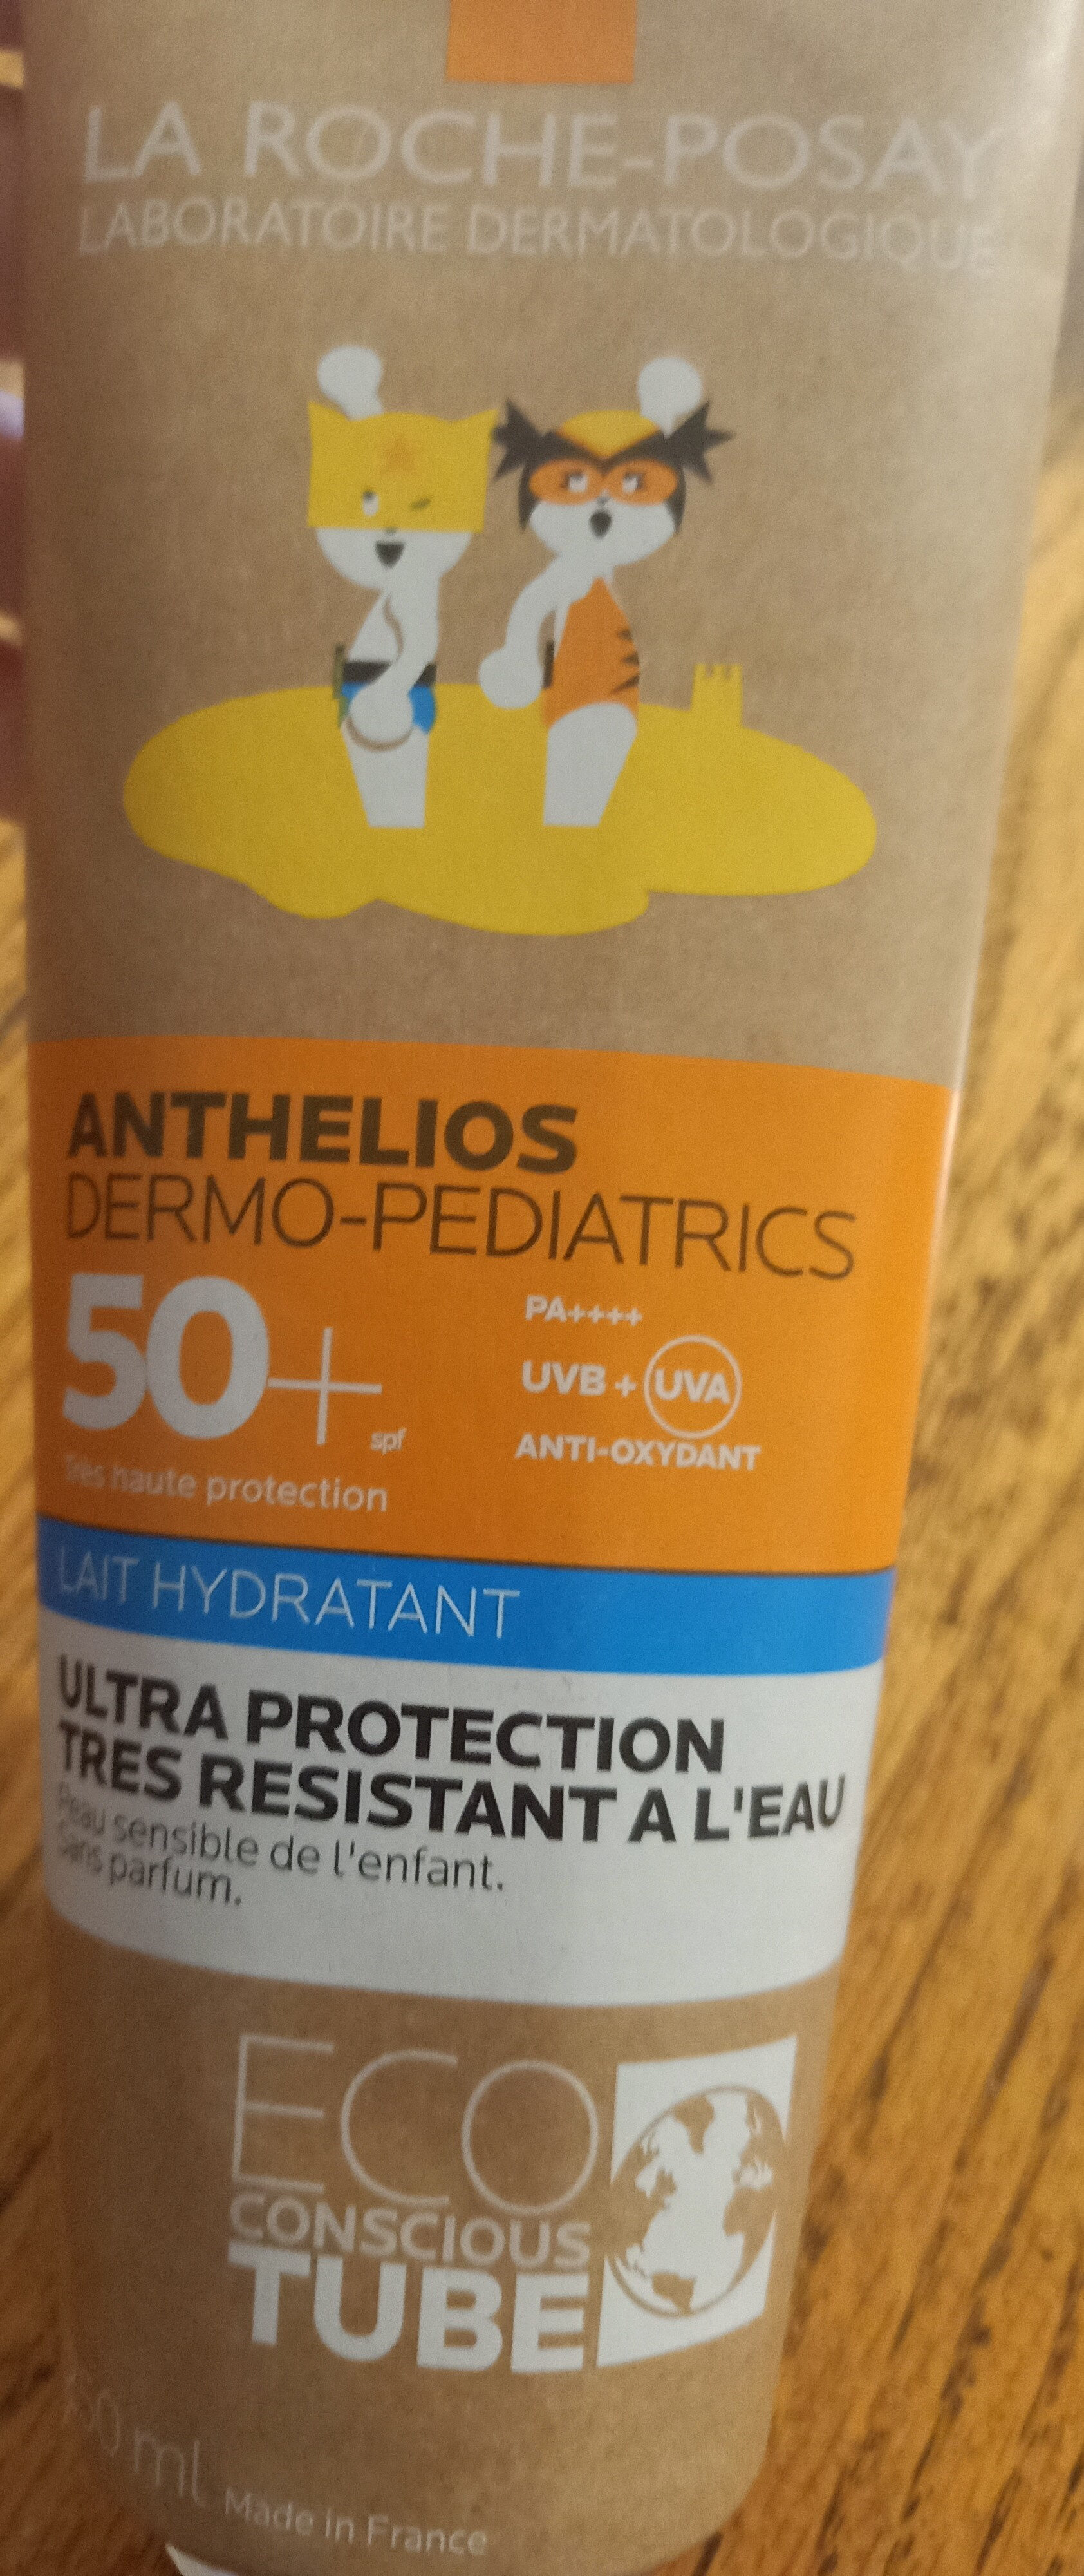 Anthelios dermo-pediatrics - Product - fr